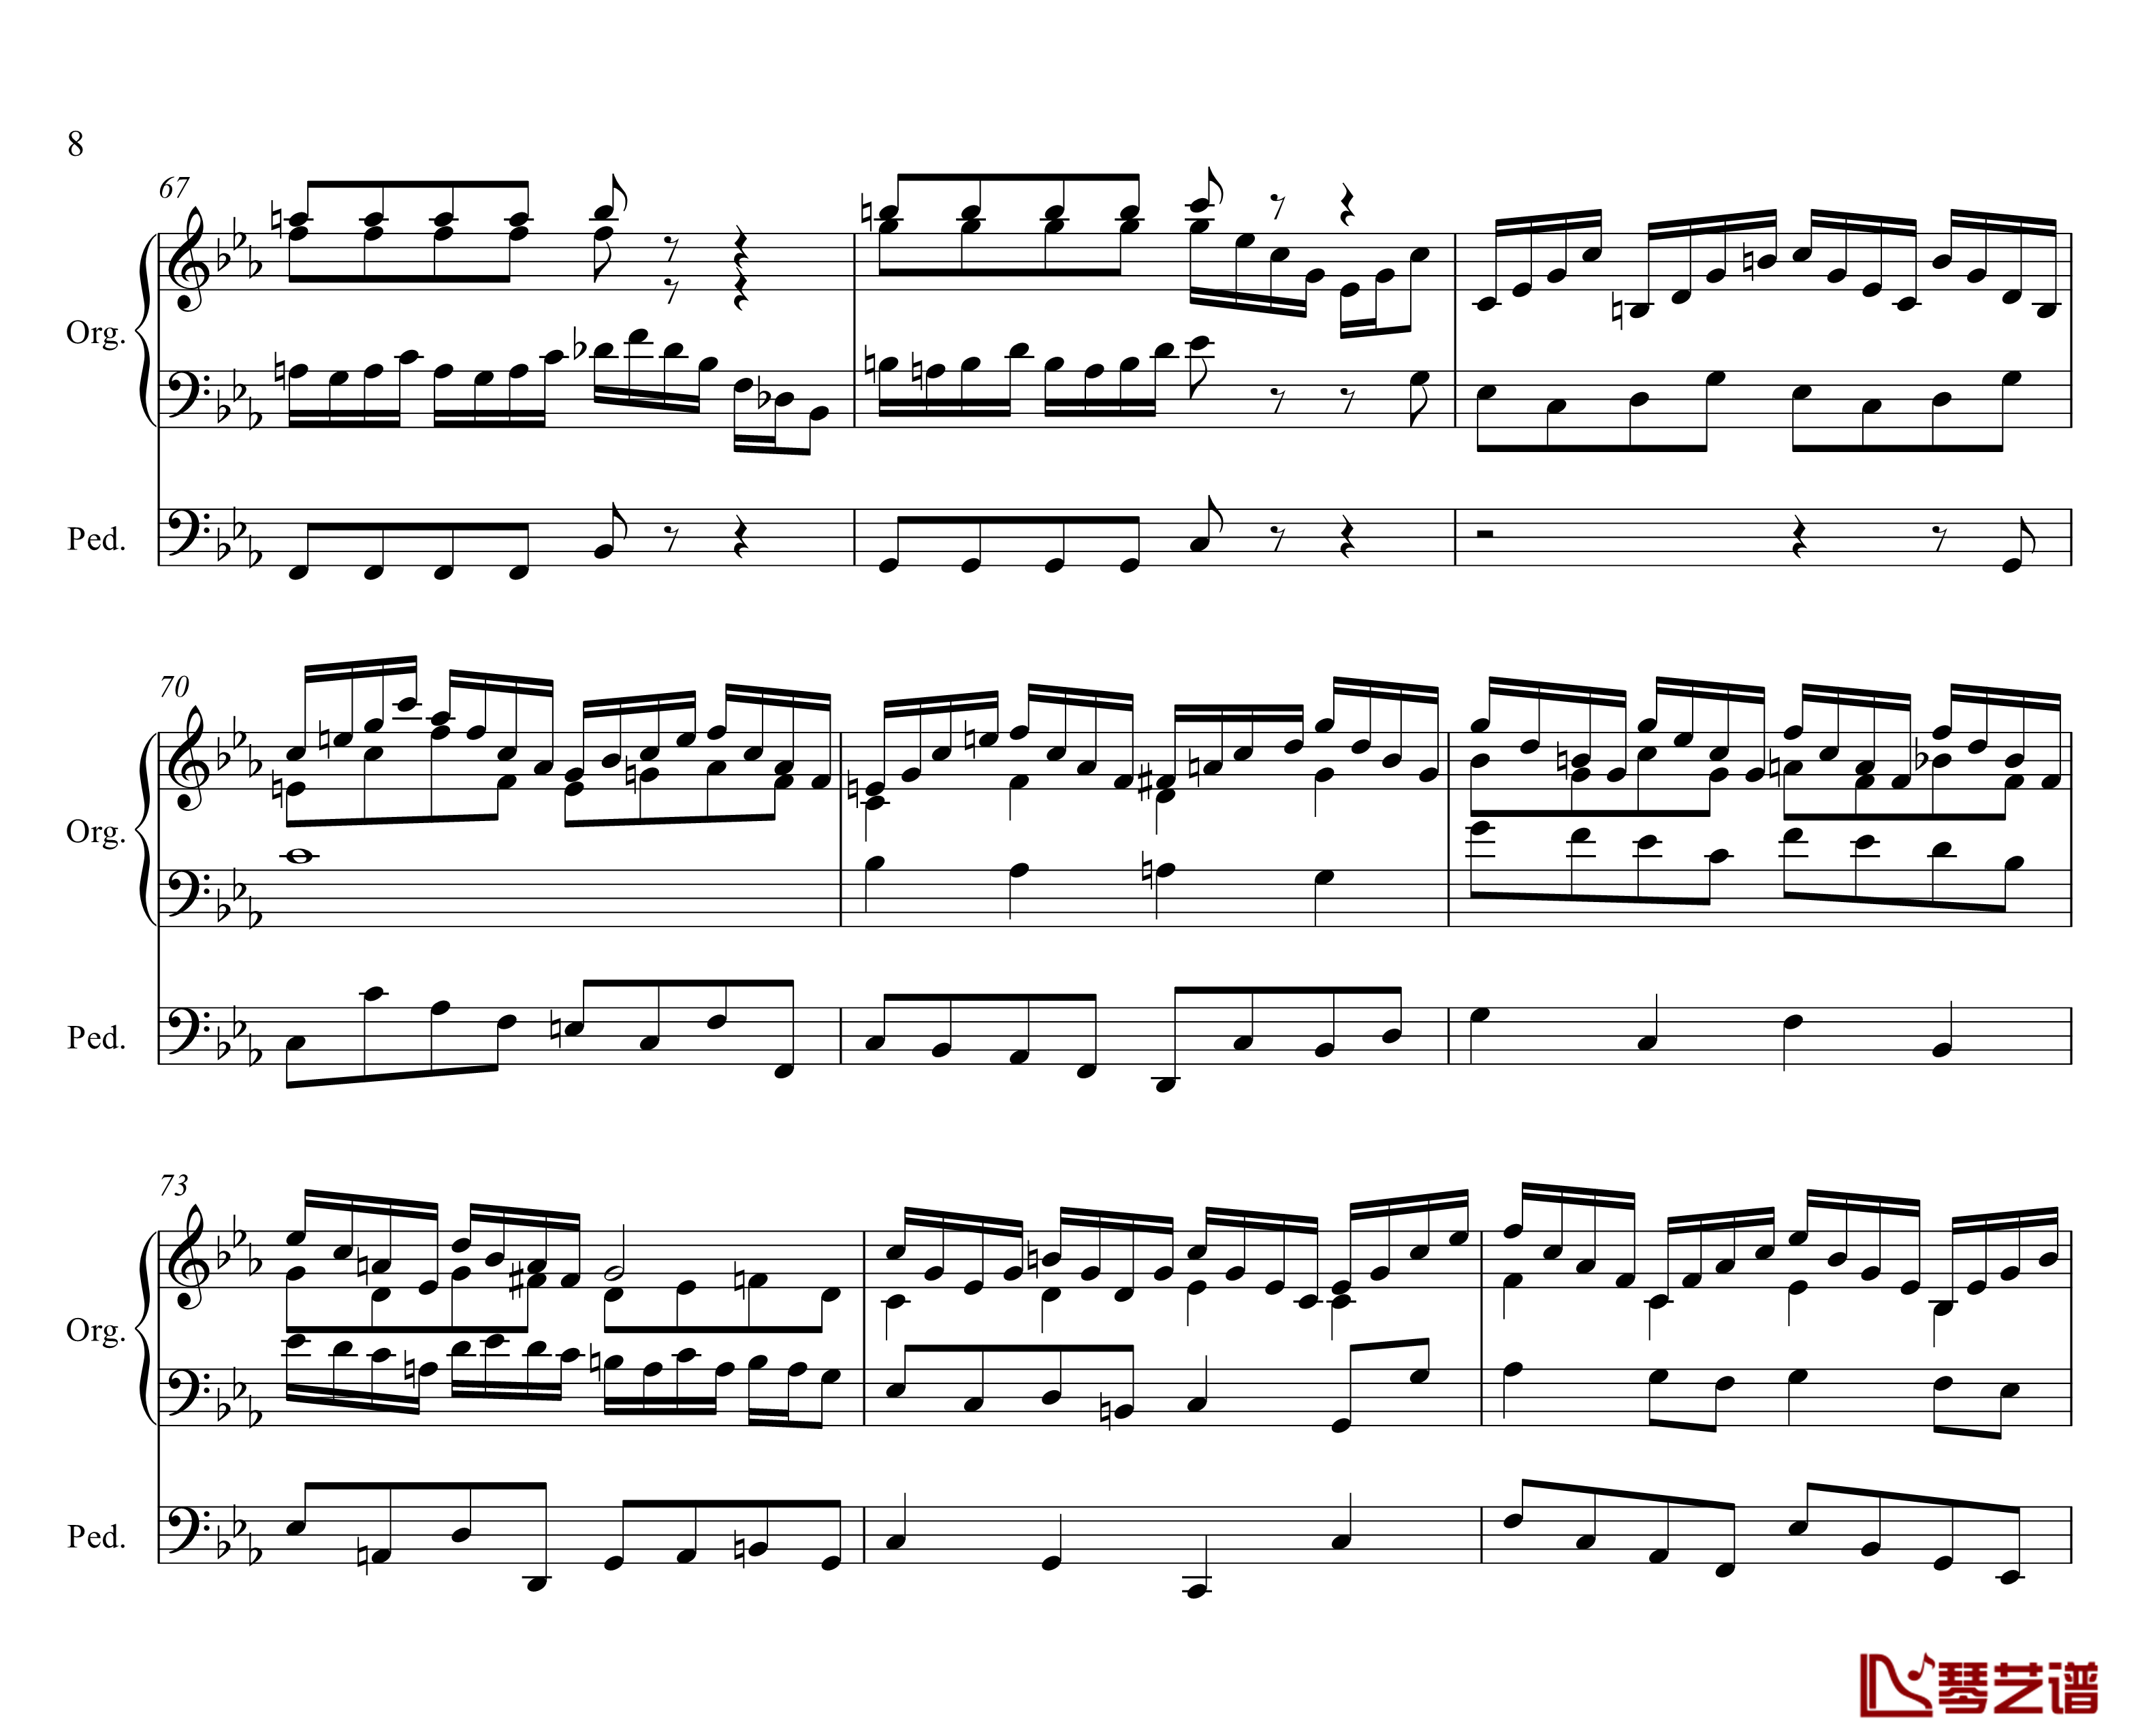 Tocatta and Fugue in C minor钢琴谱-P.D.Q.Bach